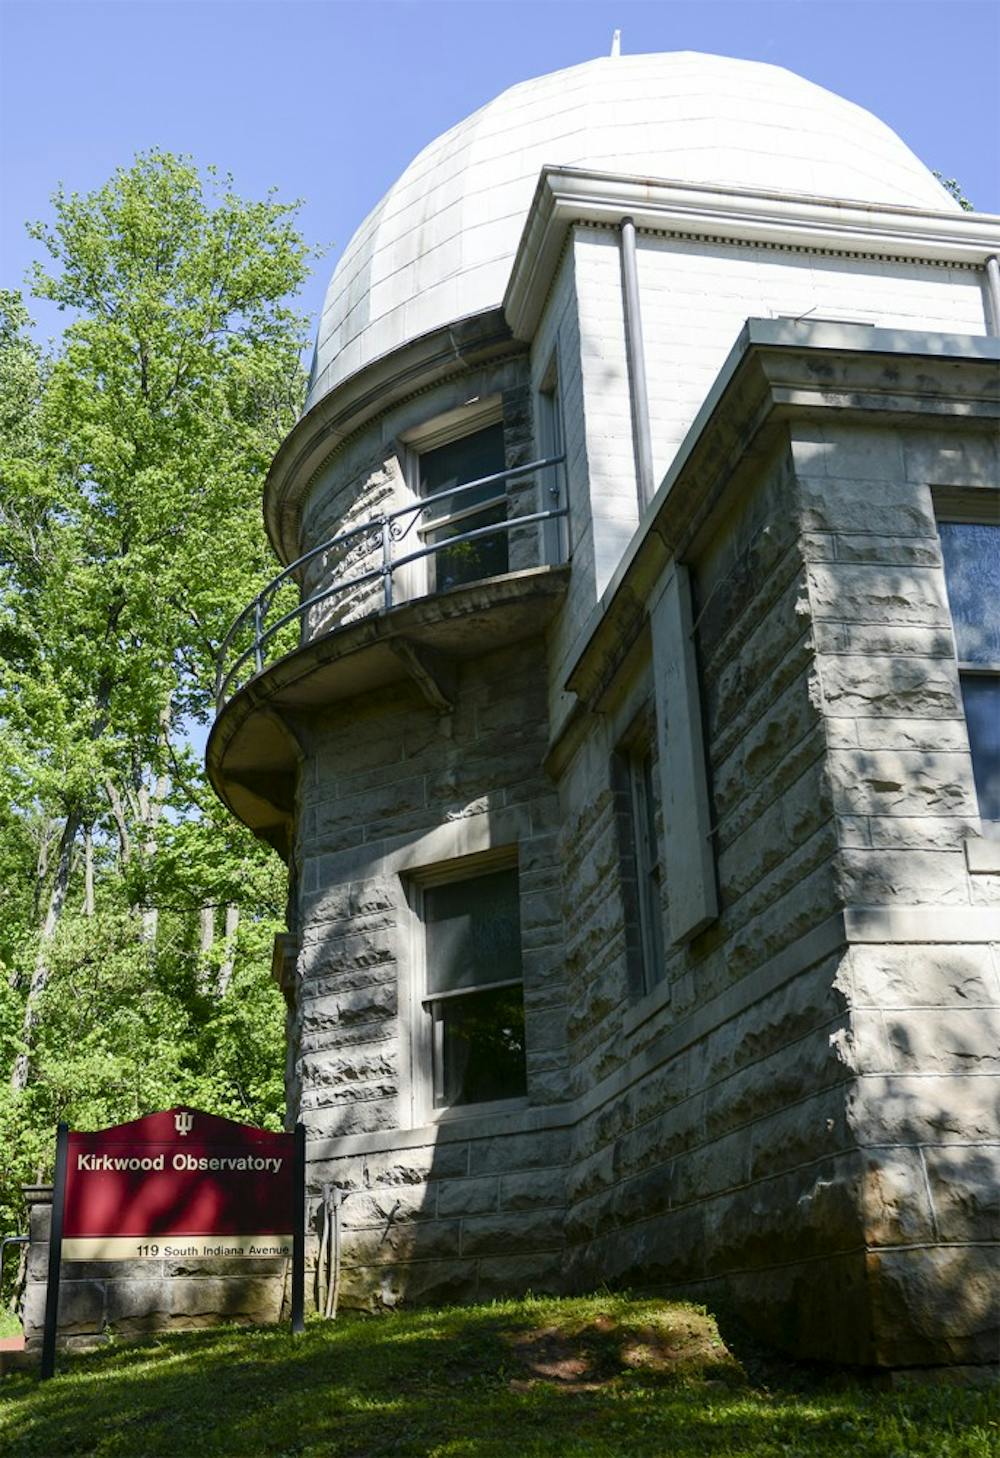 Kirkwood Observatory hosts 115th Anniversary on Sunday evening. 